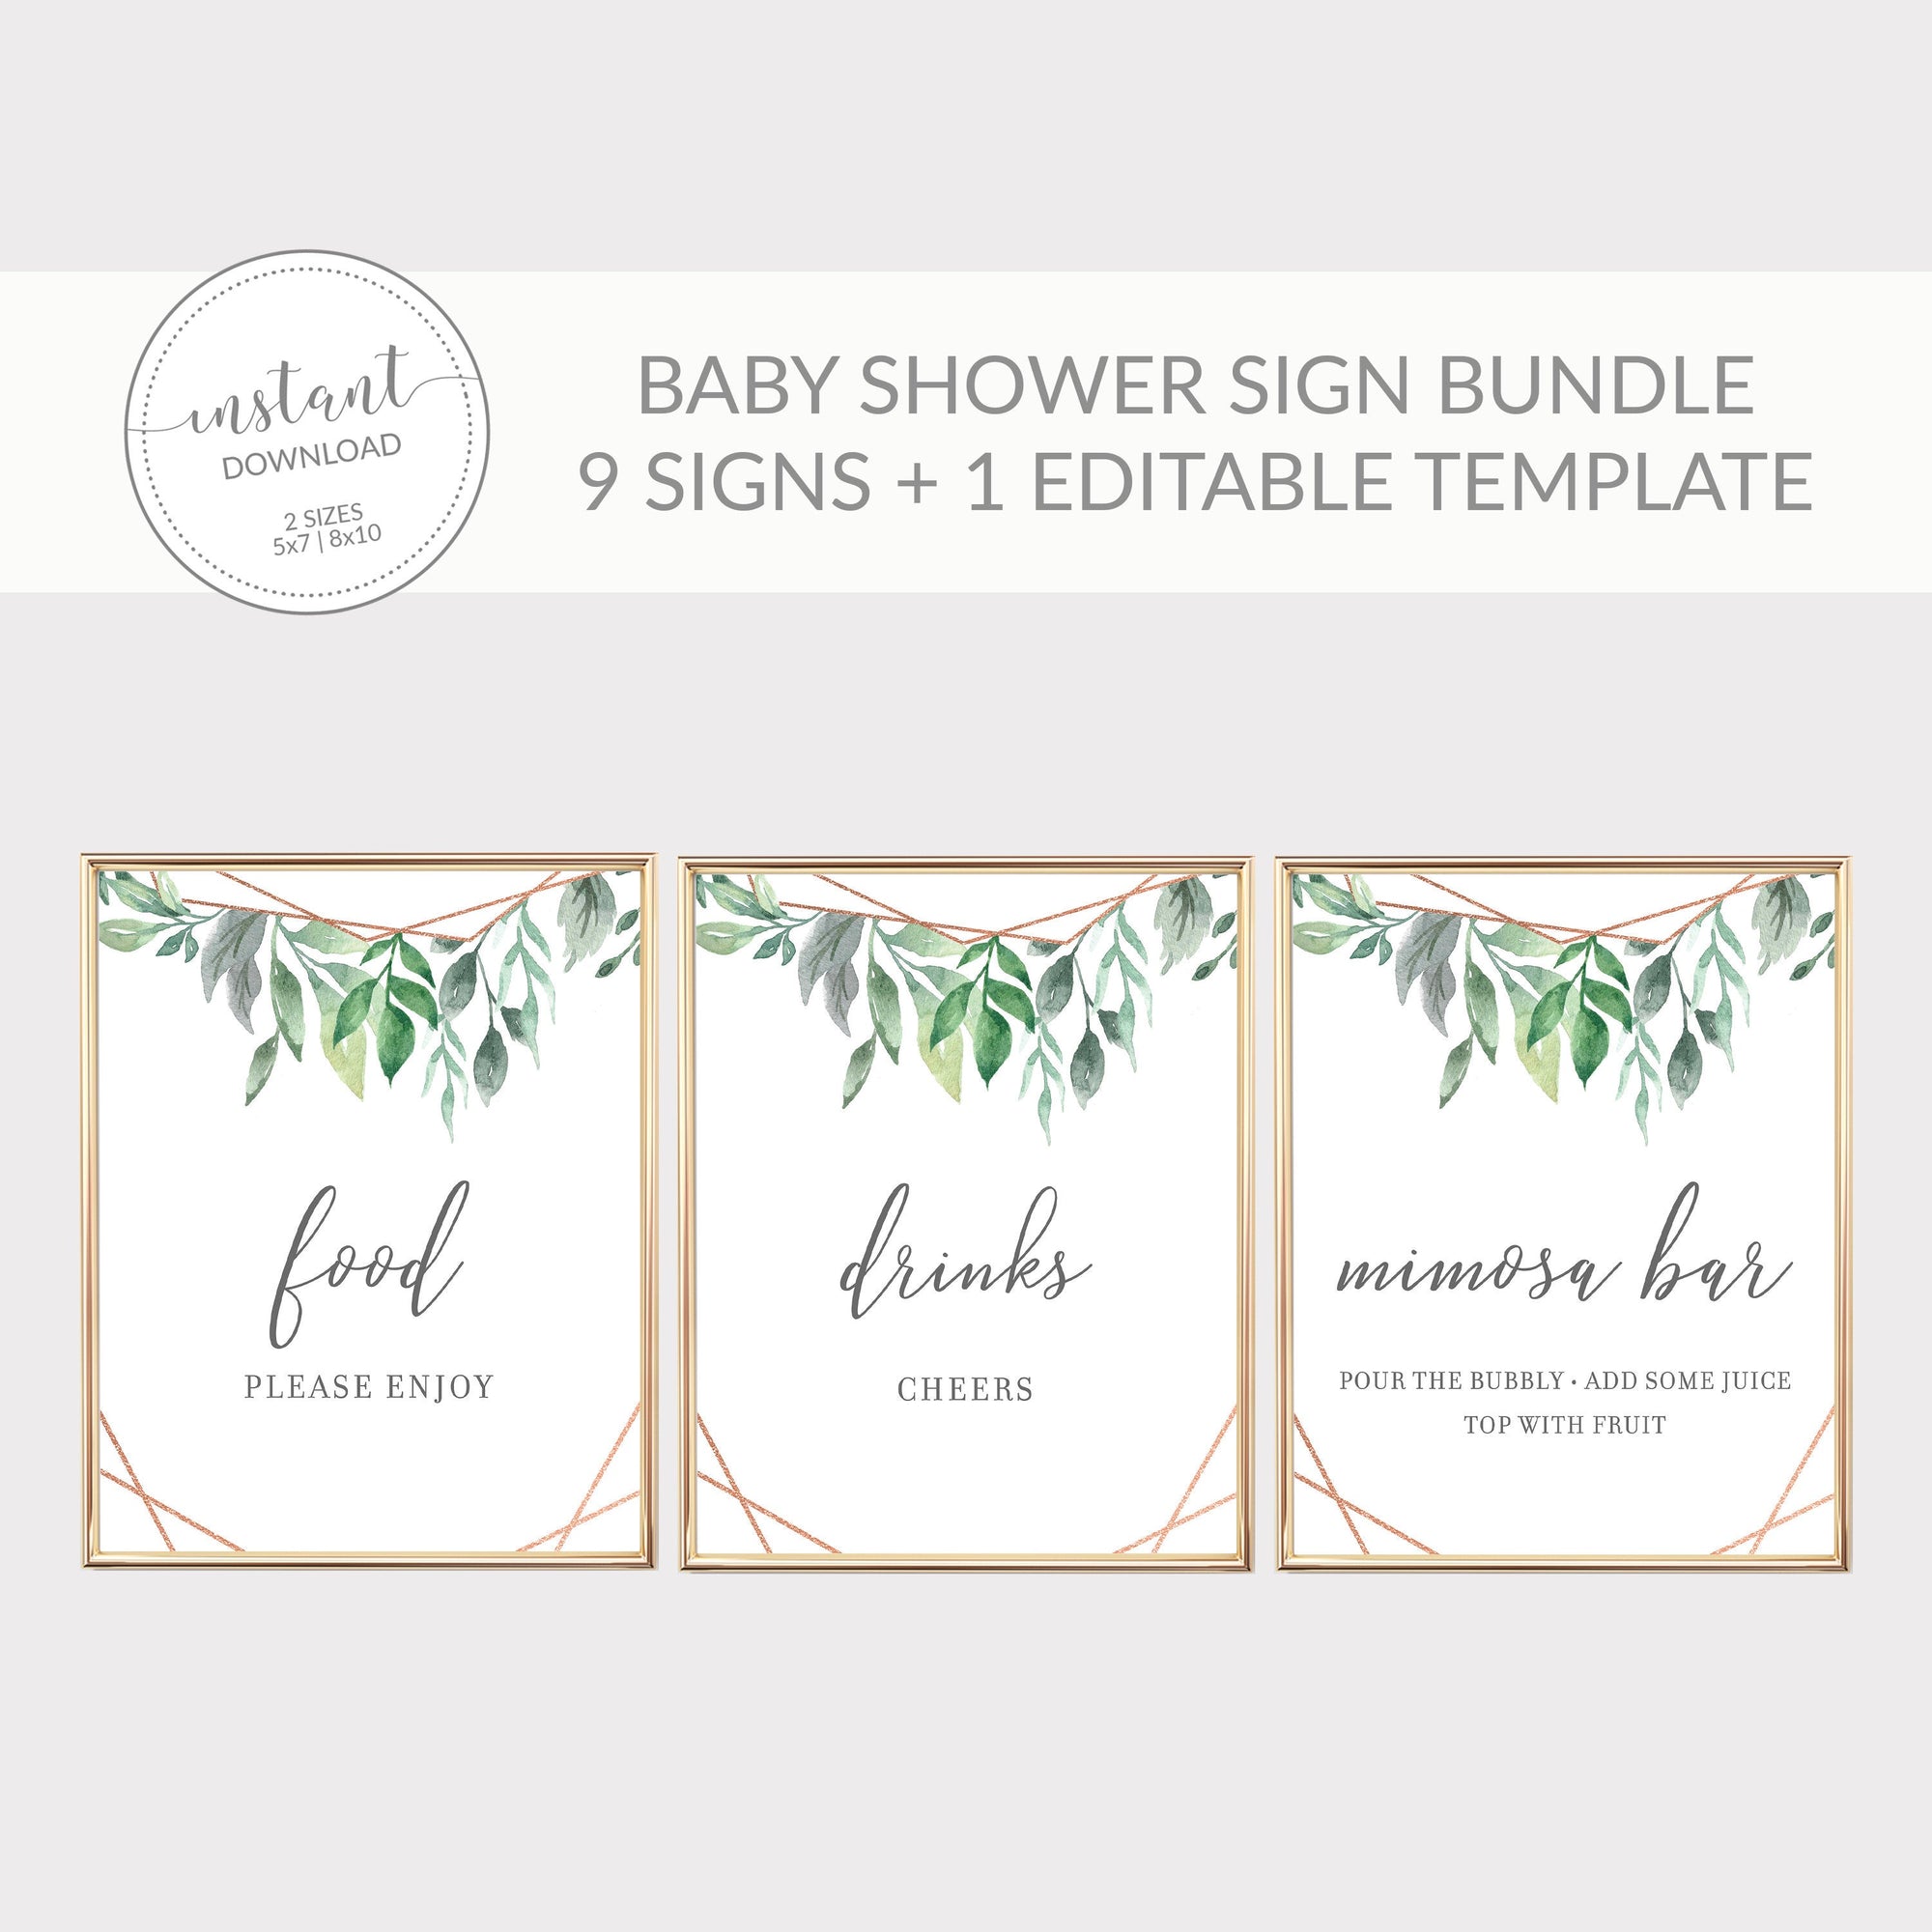 Greenery Baby Shower Decorations, Geometric Baby Shower Sign Bundle, Editable Baby Shower Template, DIGITAL DOWNLOAD - GFRG100 - @PlumPolkaDot 